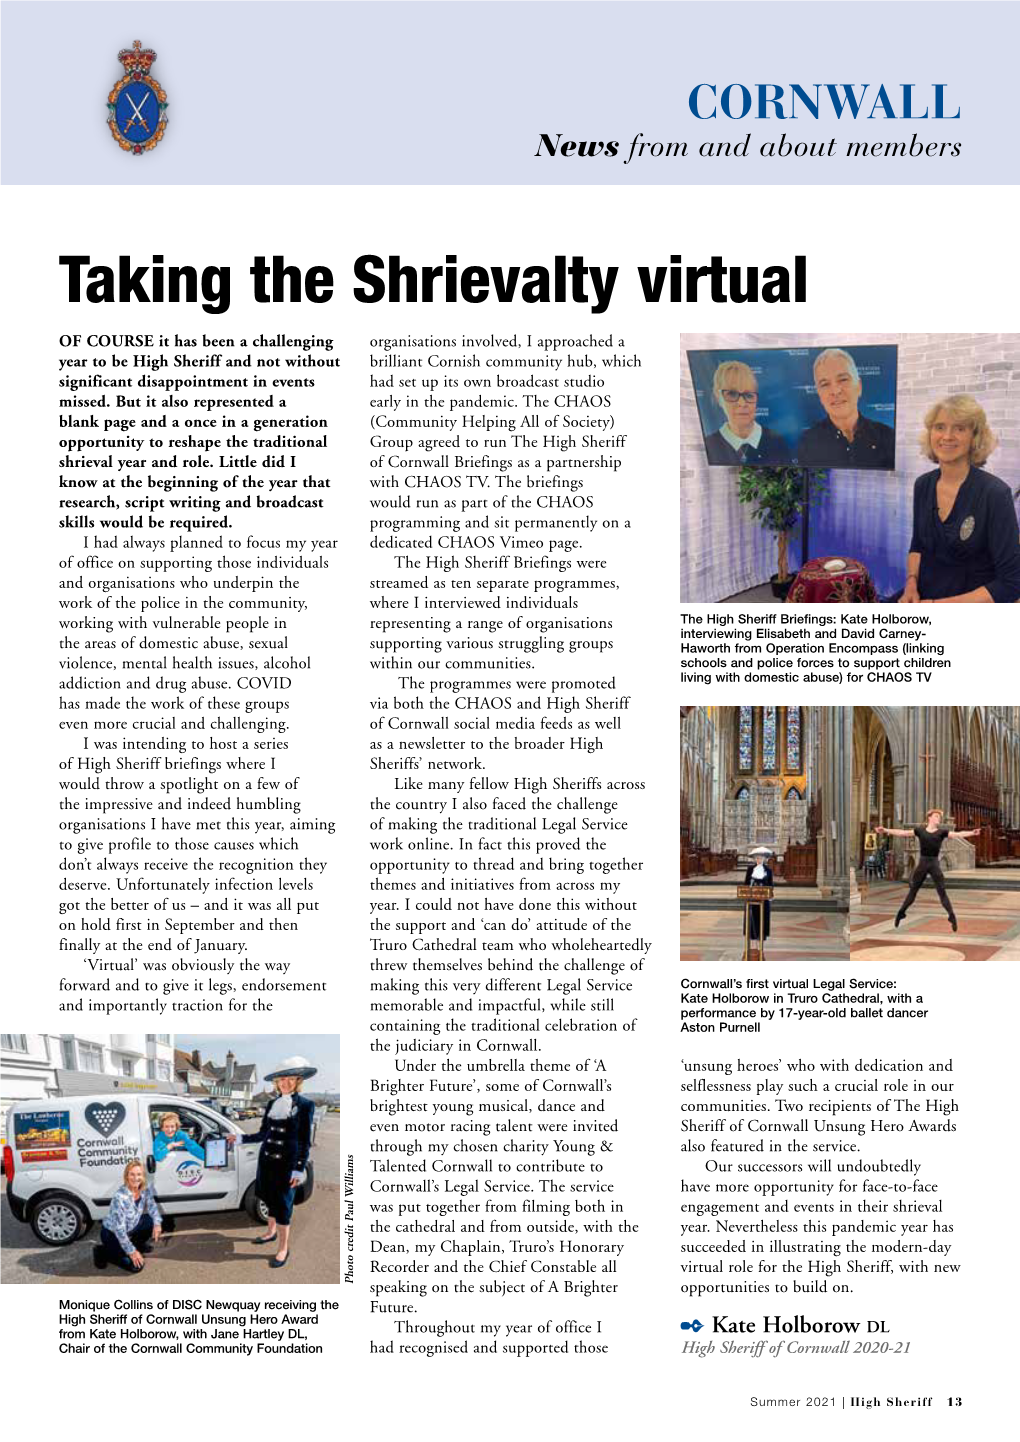 Taking the Shrievalty Virtual